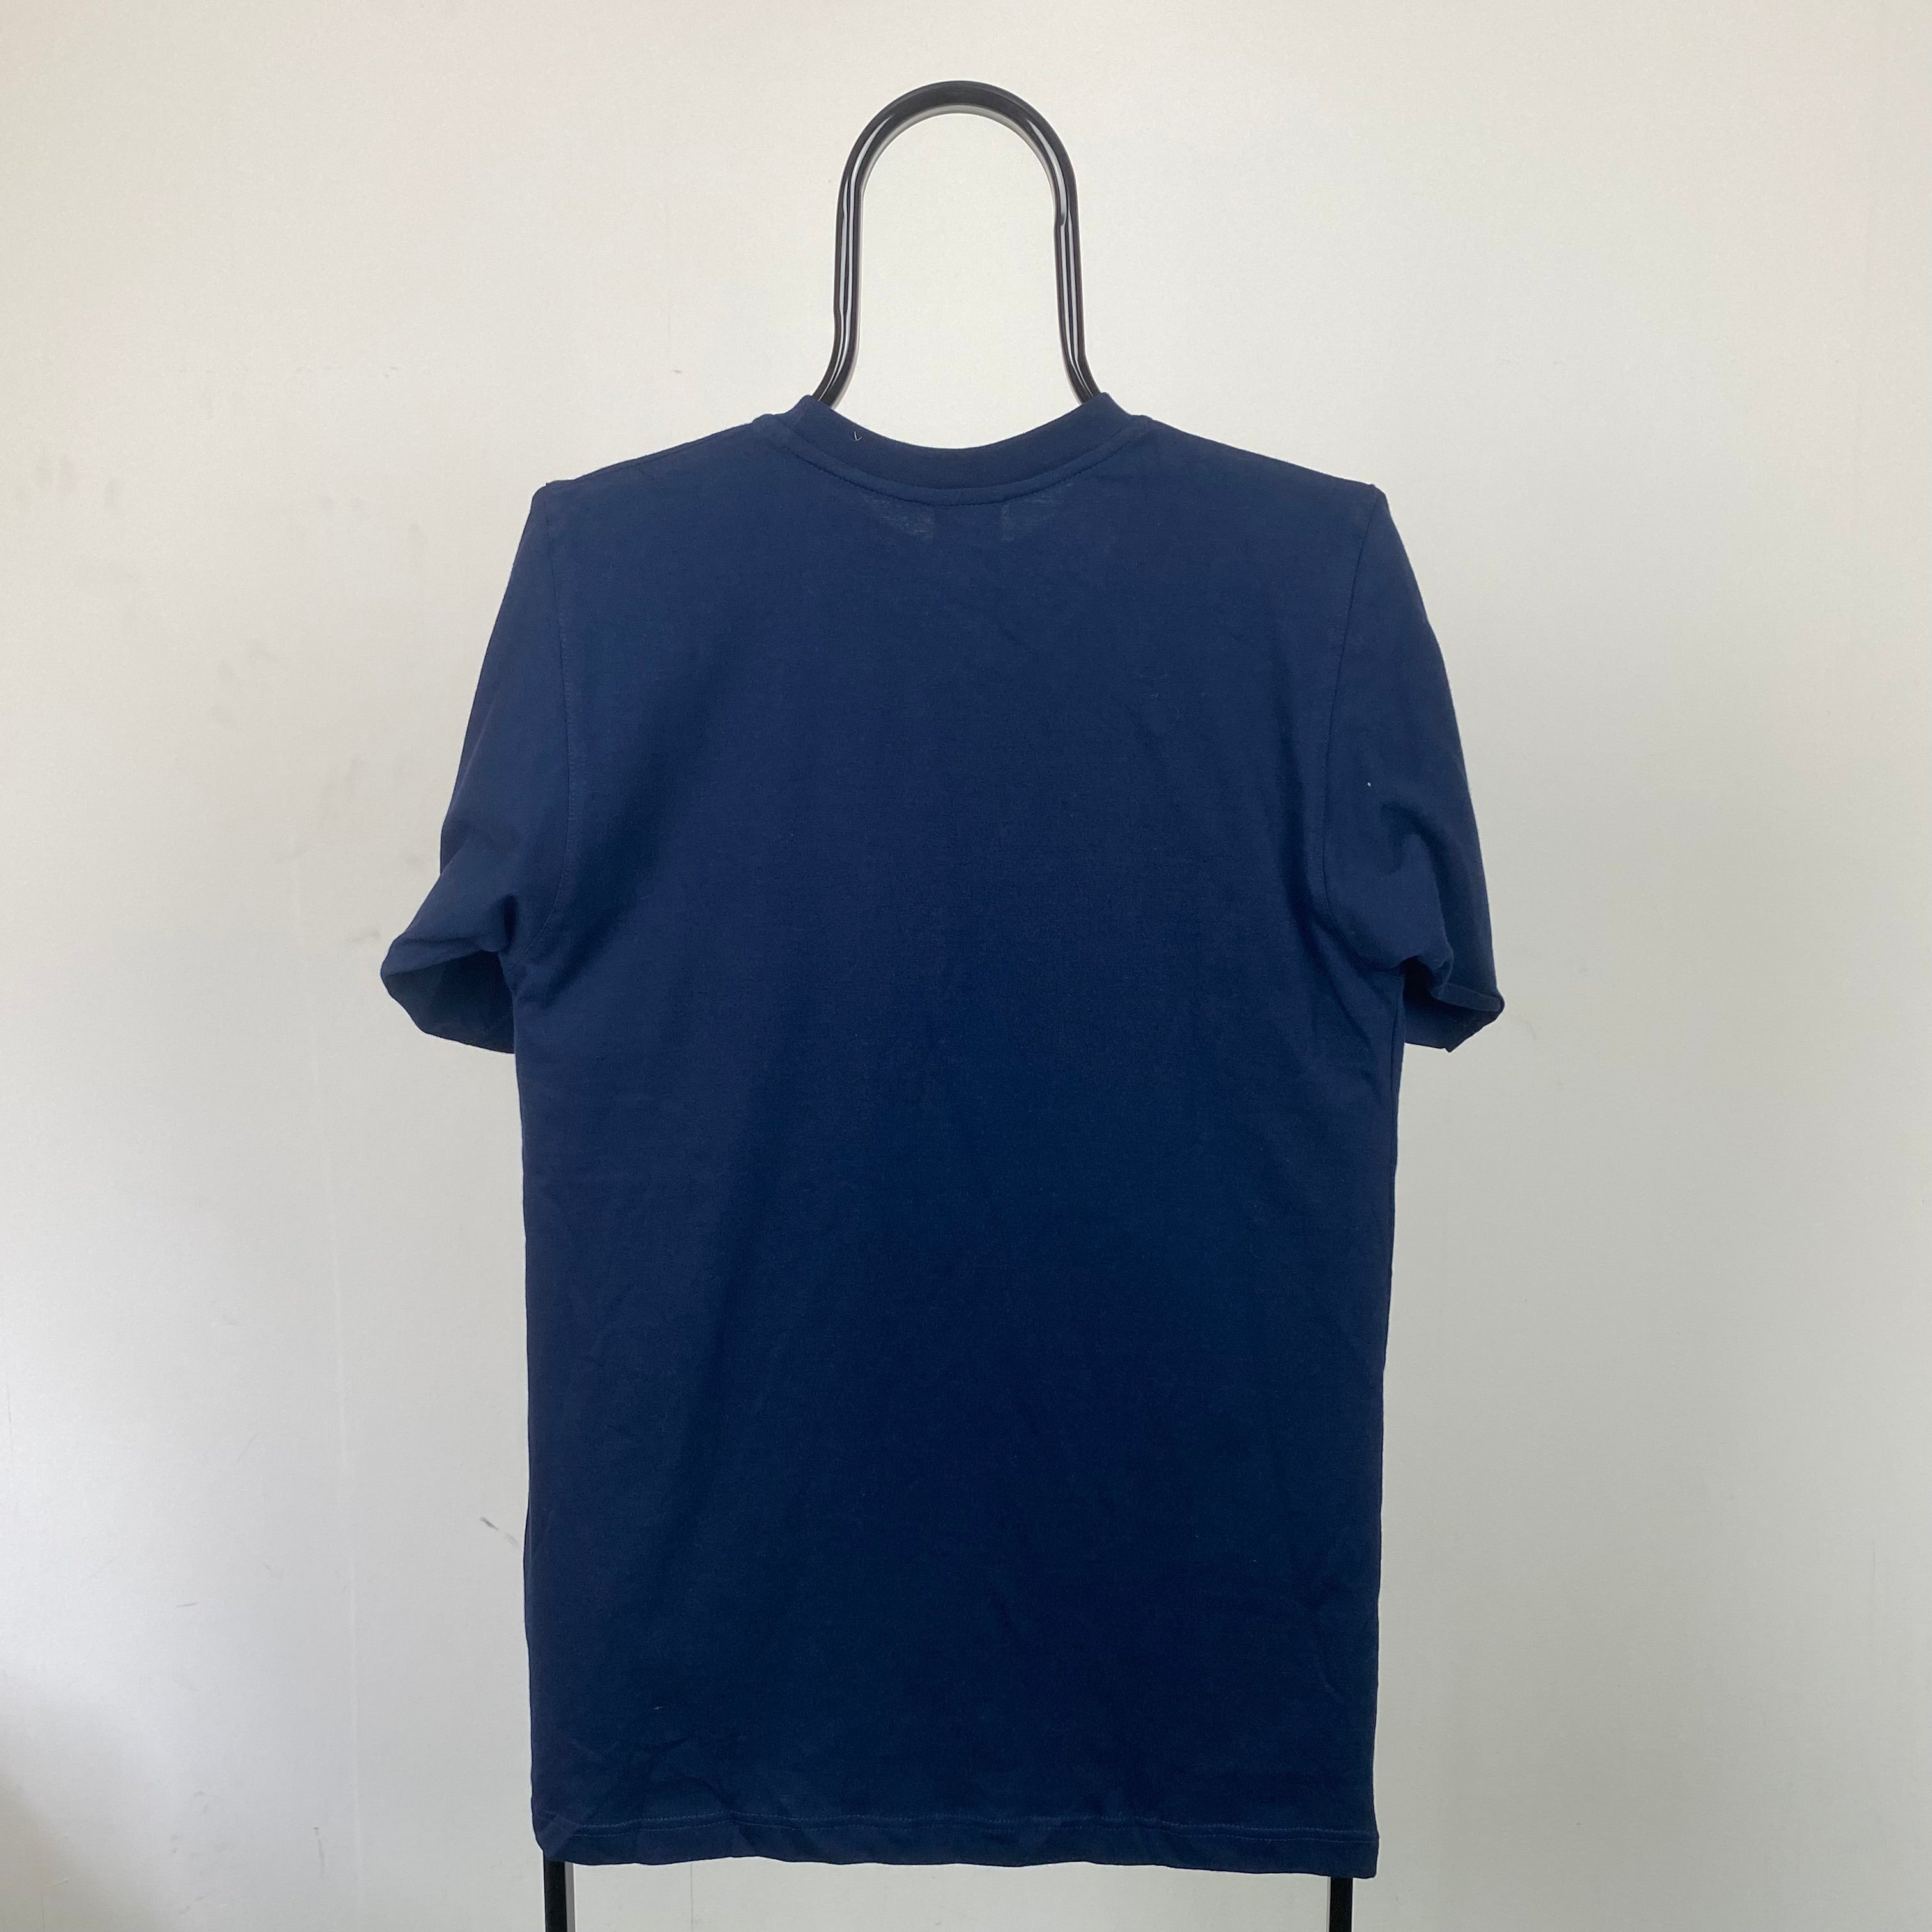 Vintage Nike Swoosh T-Shirt Blue Small